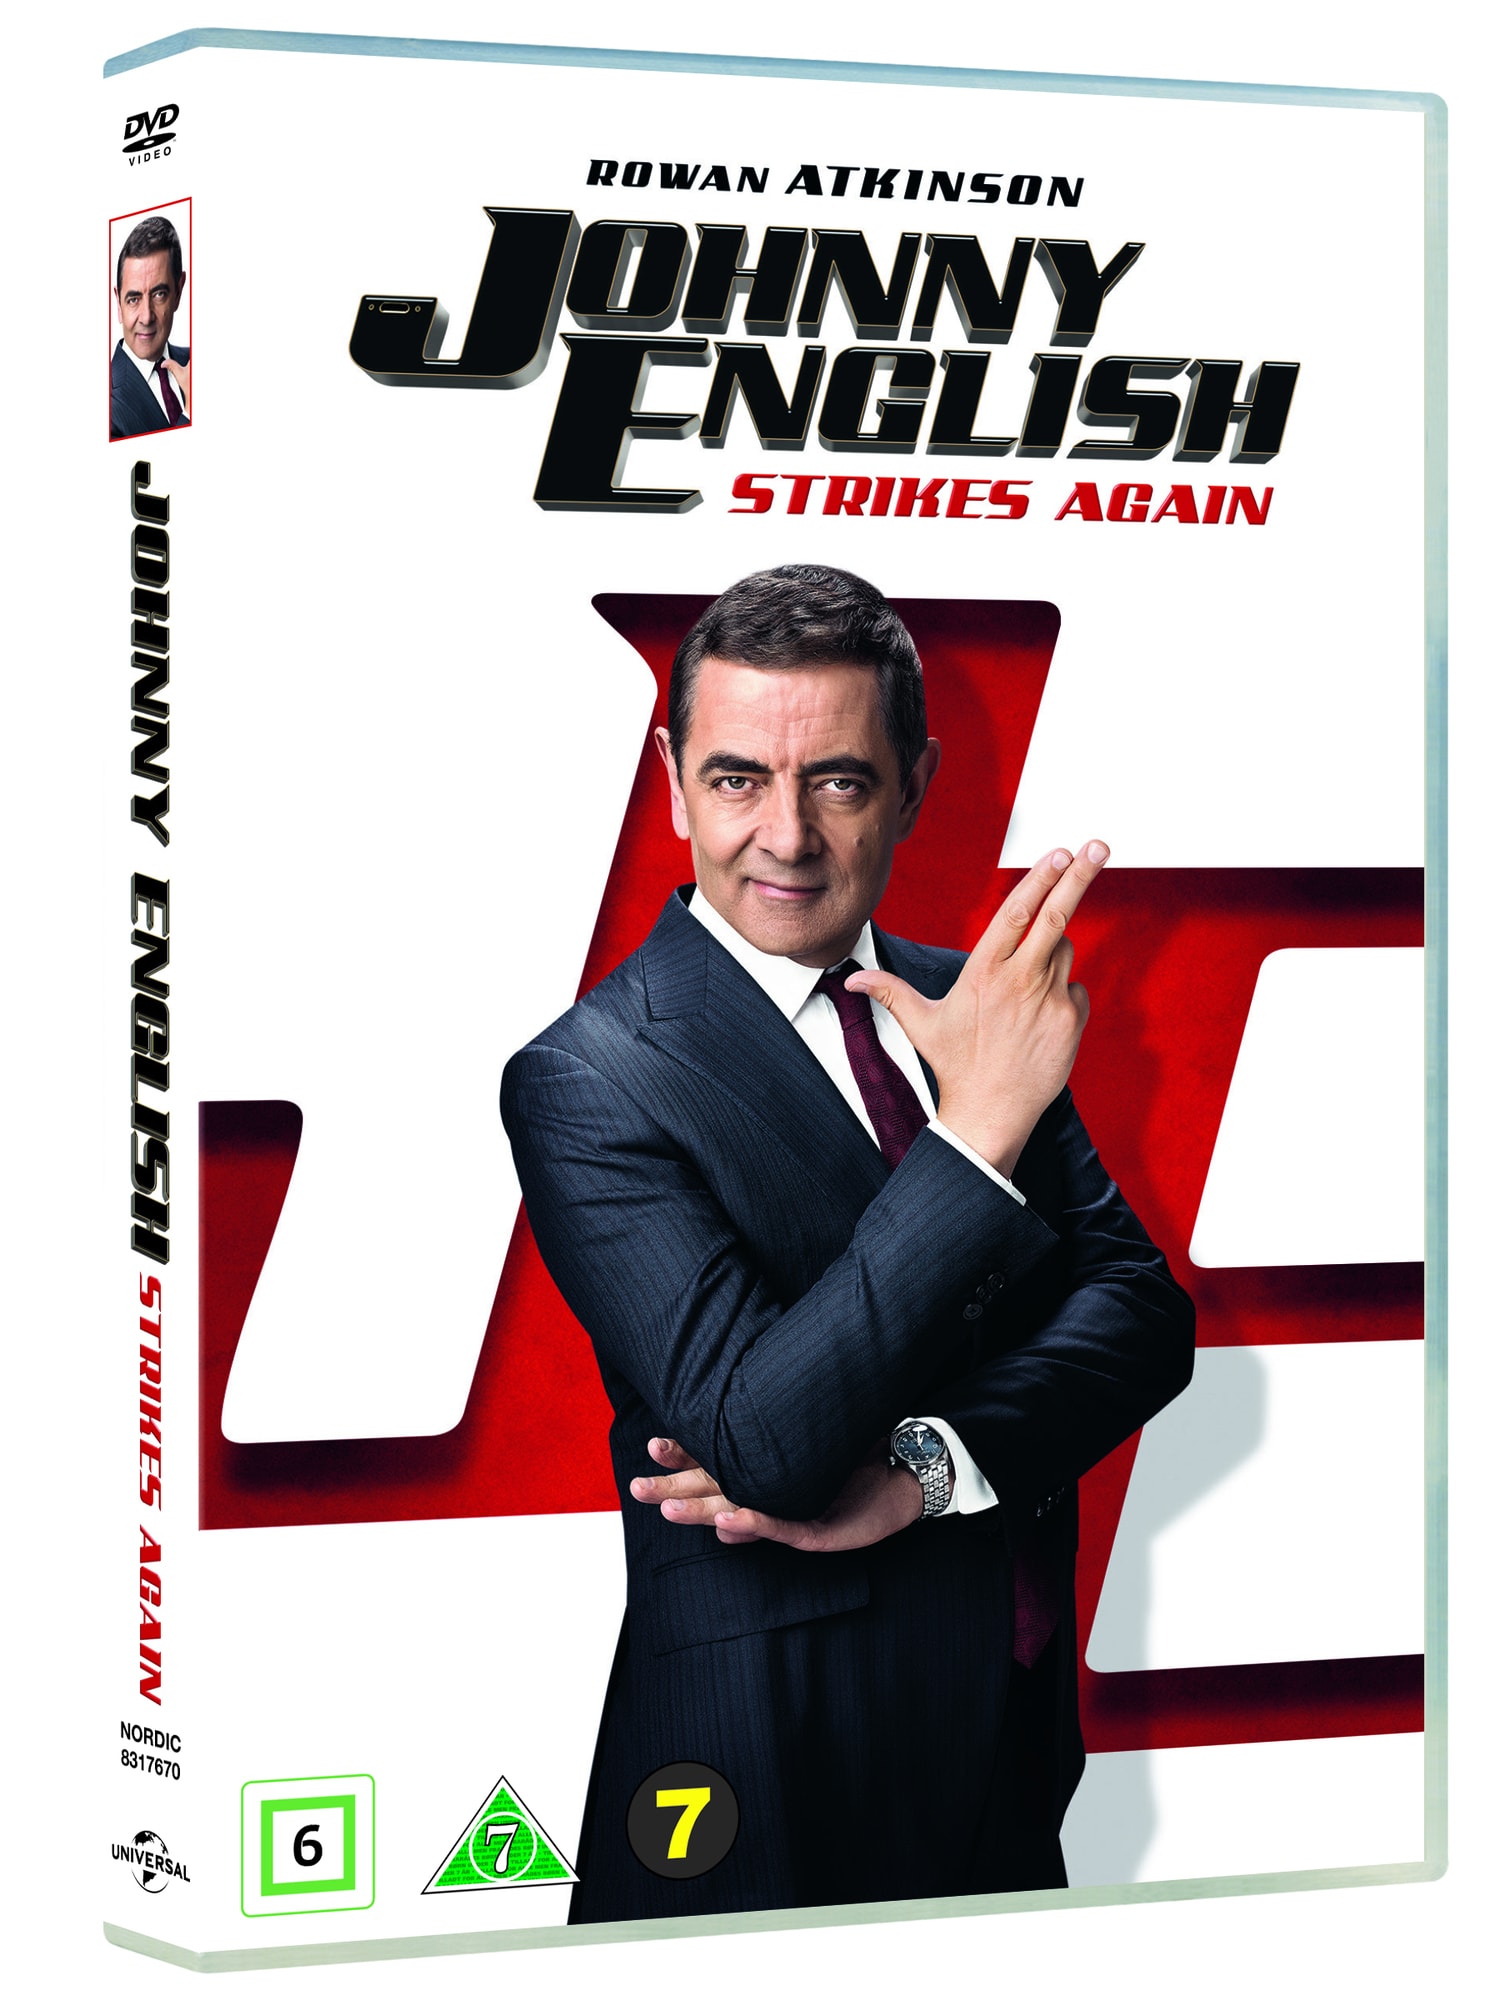 Johnny english strikes again (dvd)